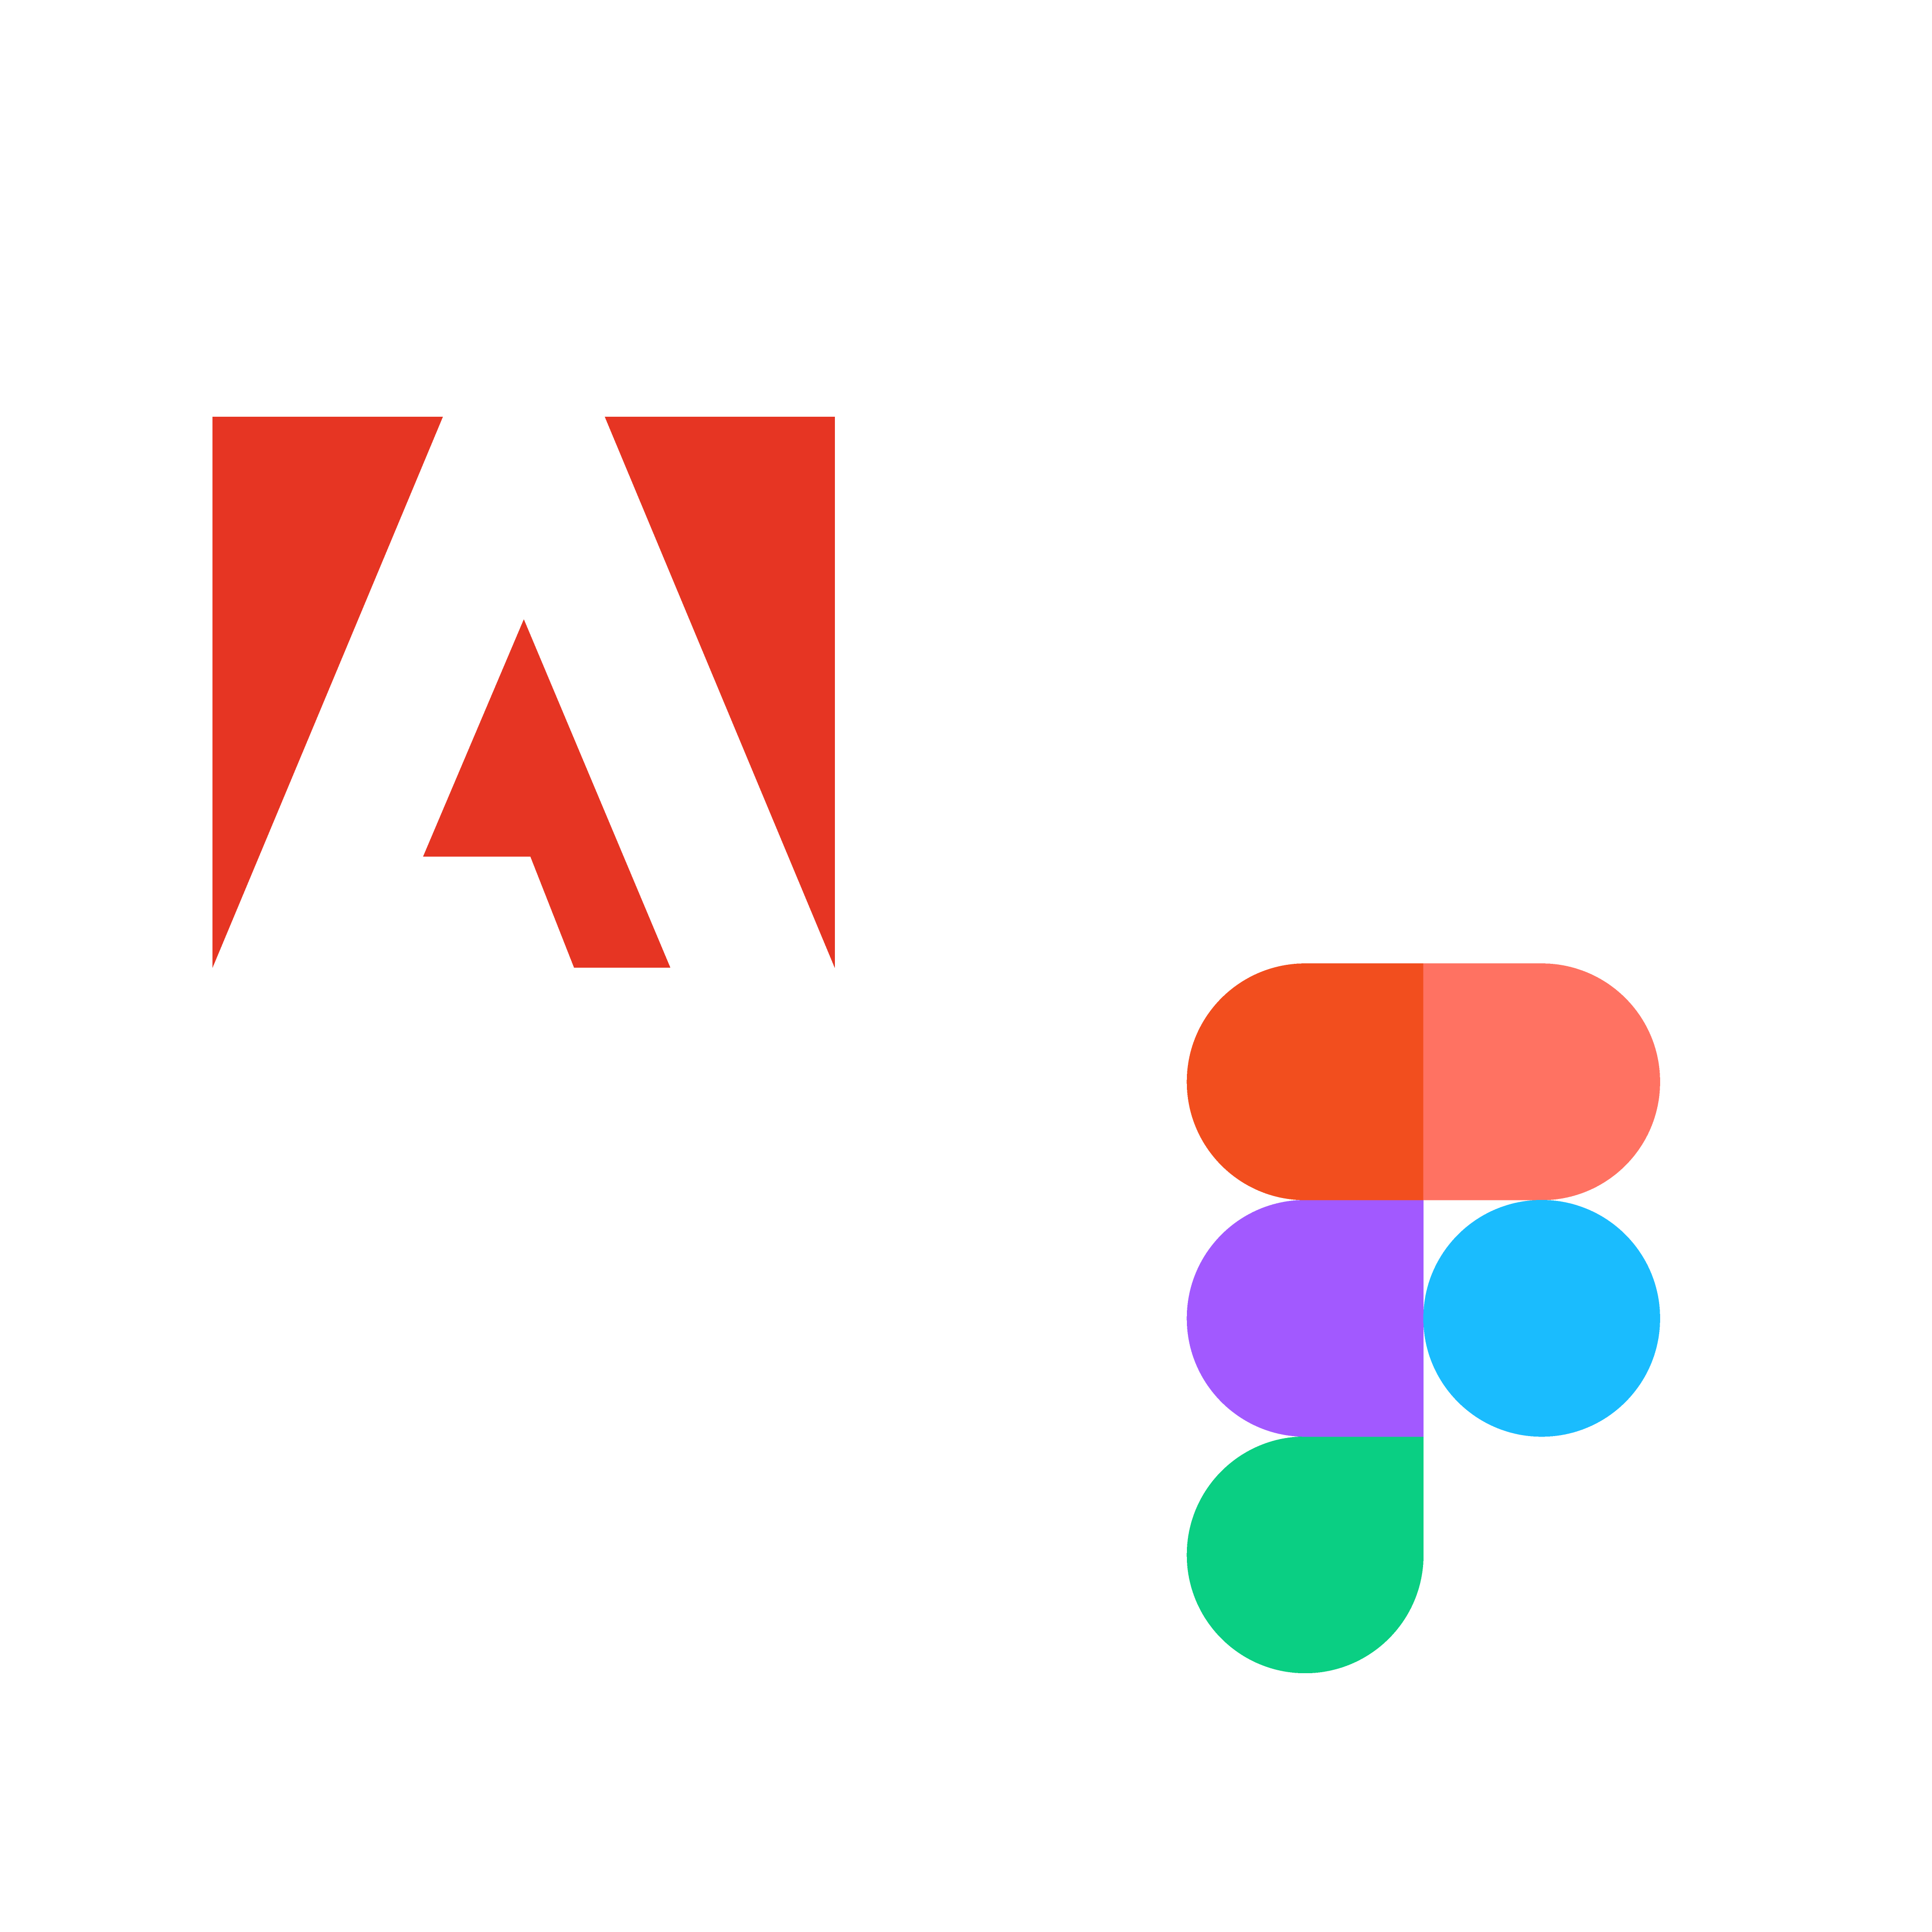 Adobe and Figma Logos